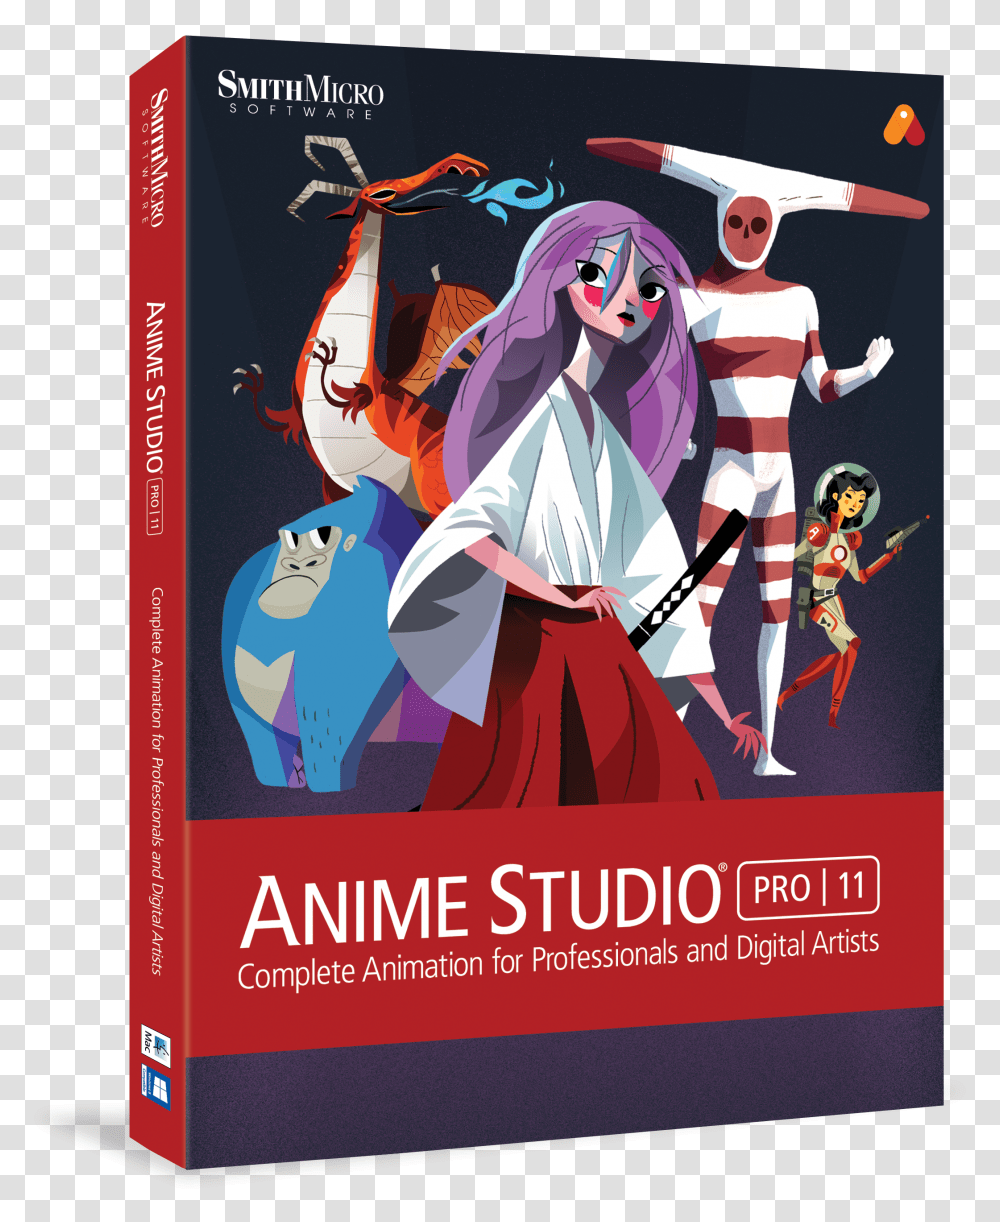 Smith Micro Anime Studio Pro 11 Anime Studio Pro 11 Transparent Png